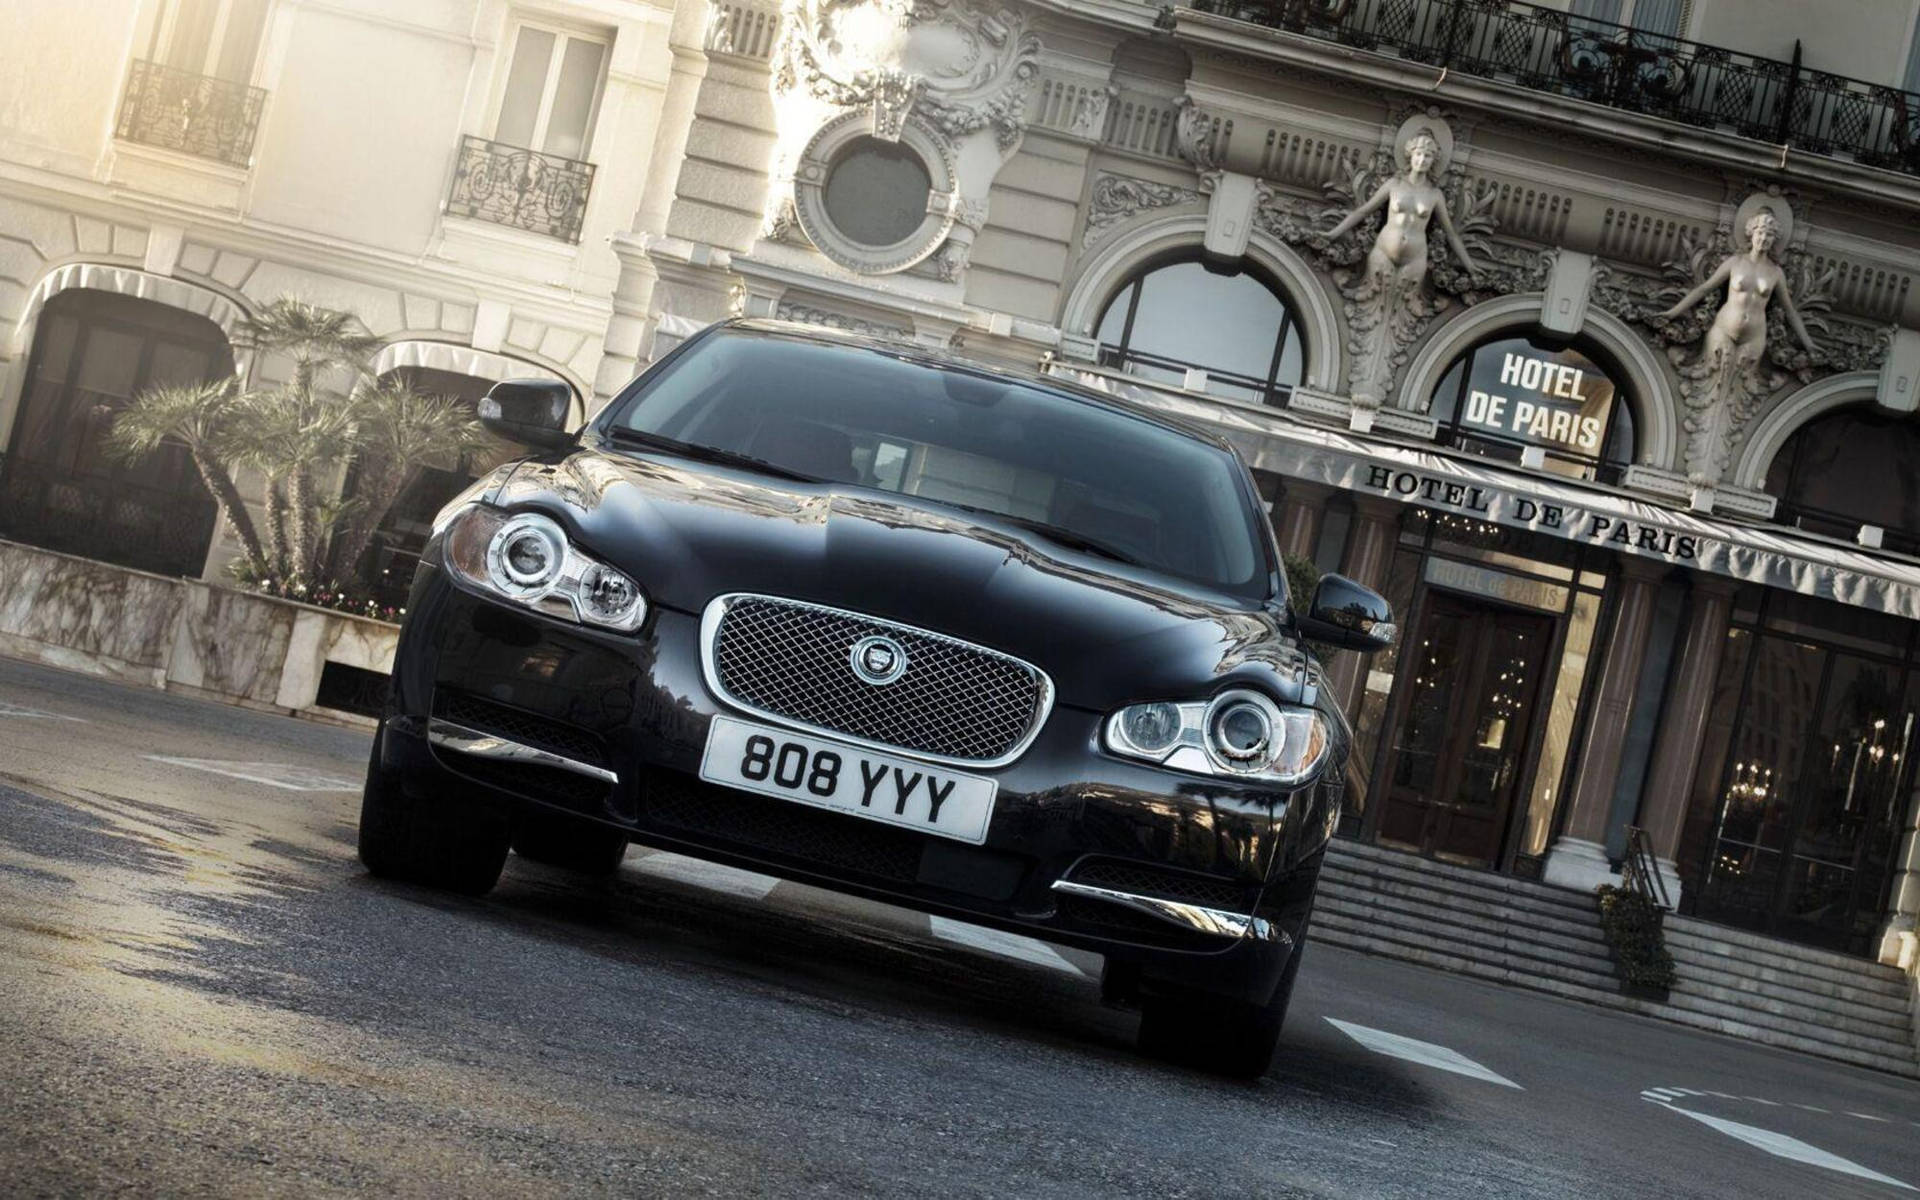 Luxury on Display: Jaguar Car at the Iconic Hotel de Paris Wallpaper